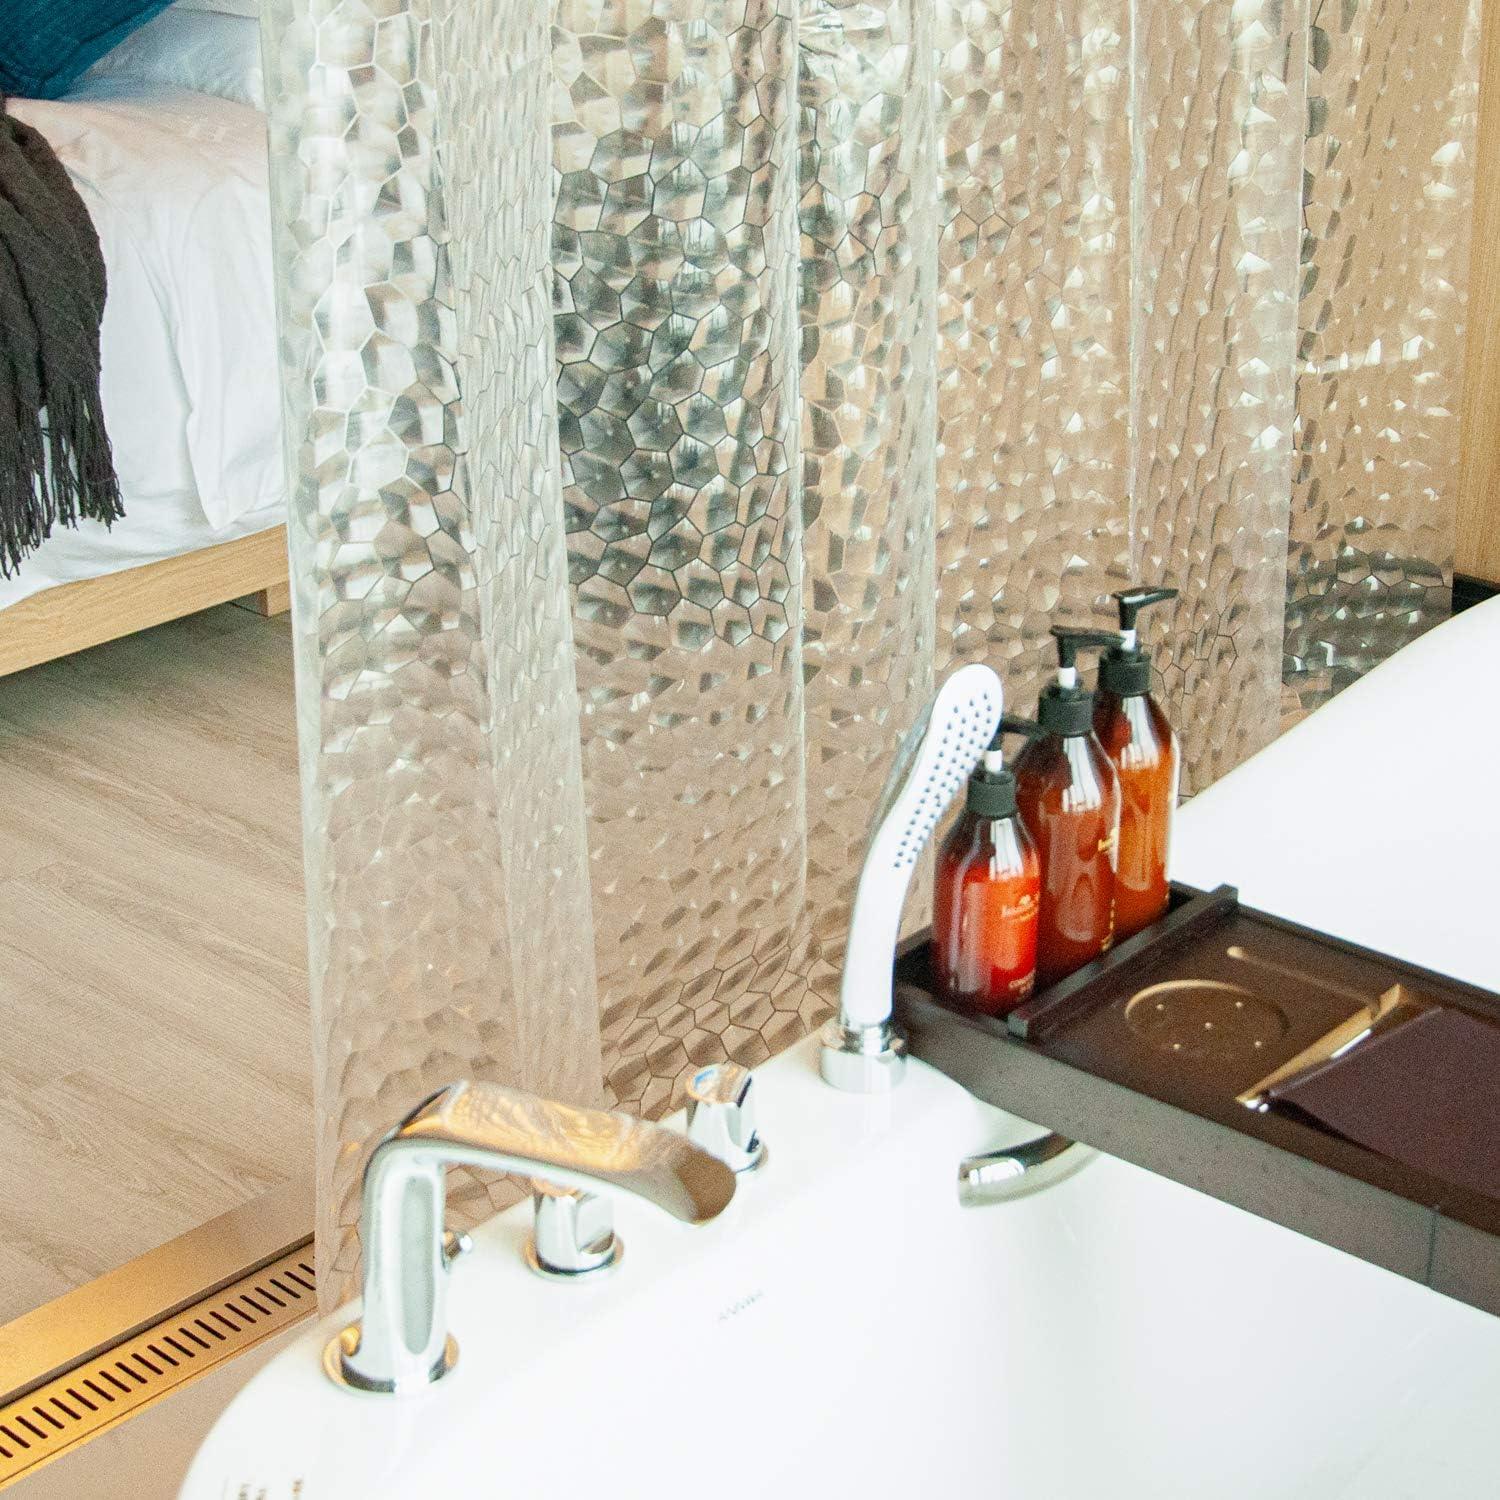 NTBAY - Cortina de ducha transparente de etilvinilacetato, repelente al  agua, para cabina de ducha de baño, cubos de agua, 72 x 72 pulgadas